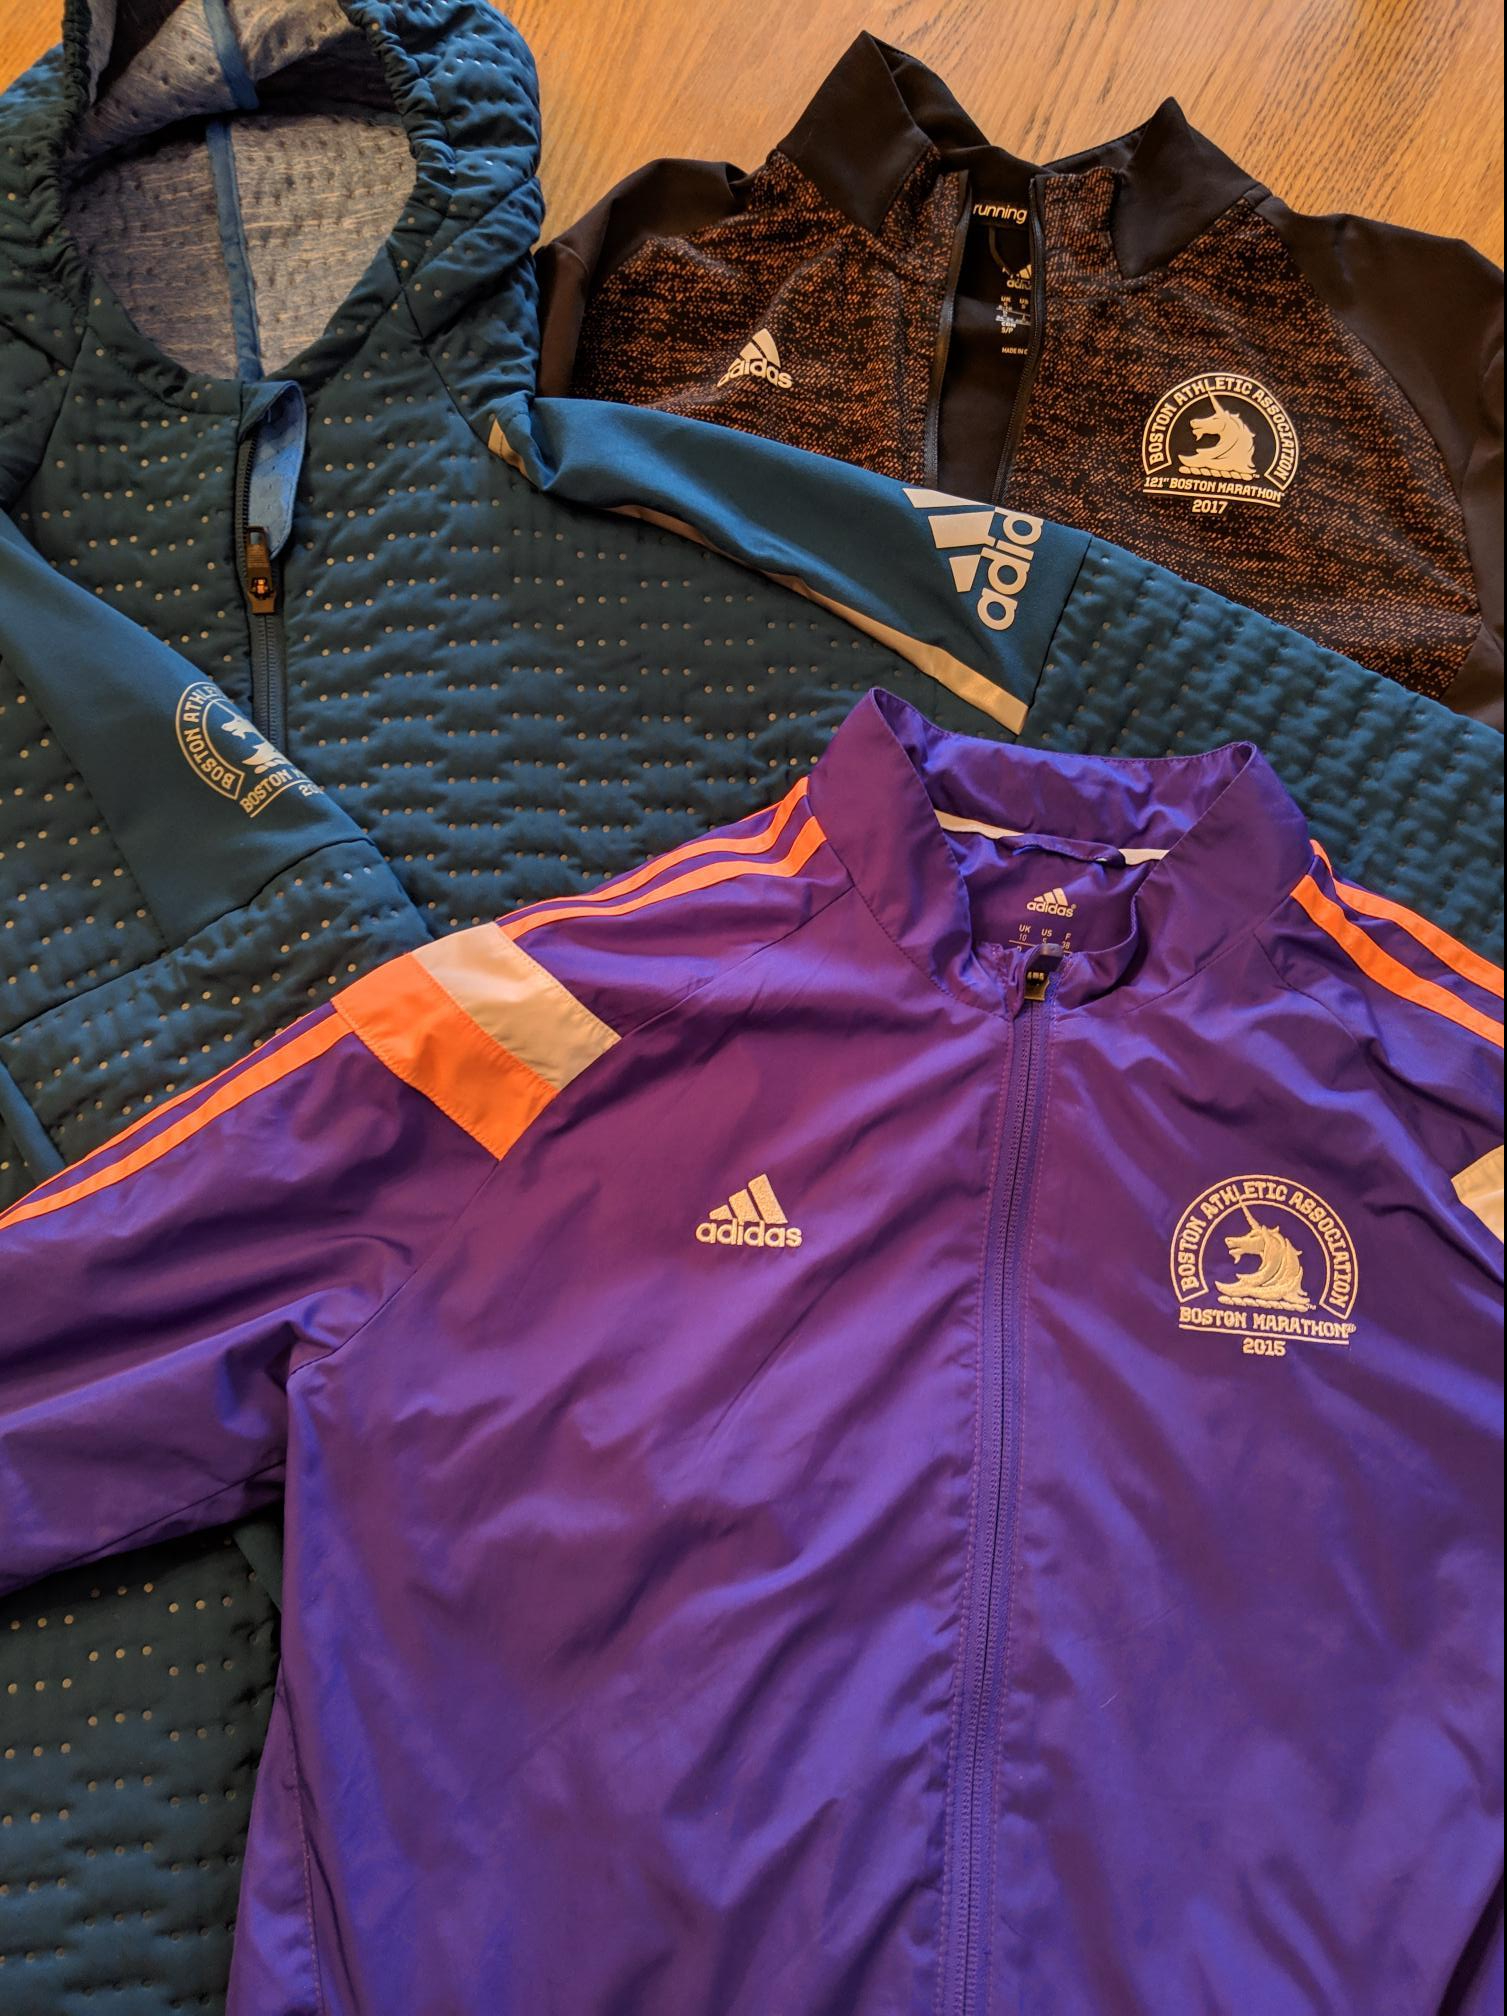 Boston marathon jackets